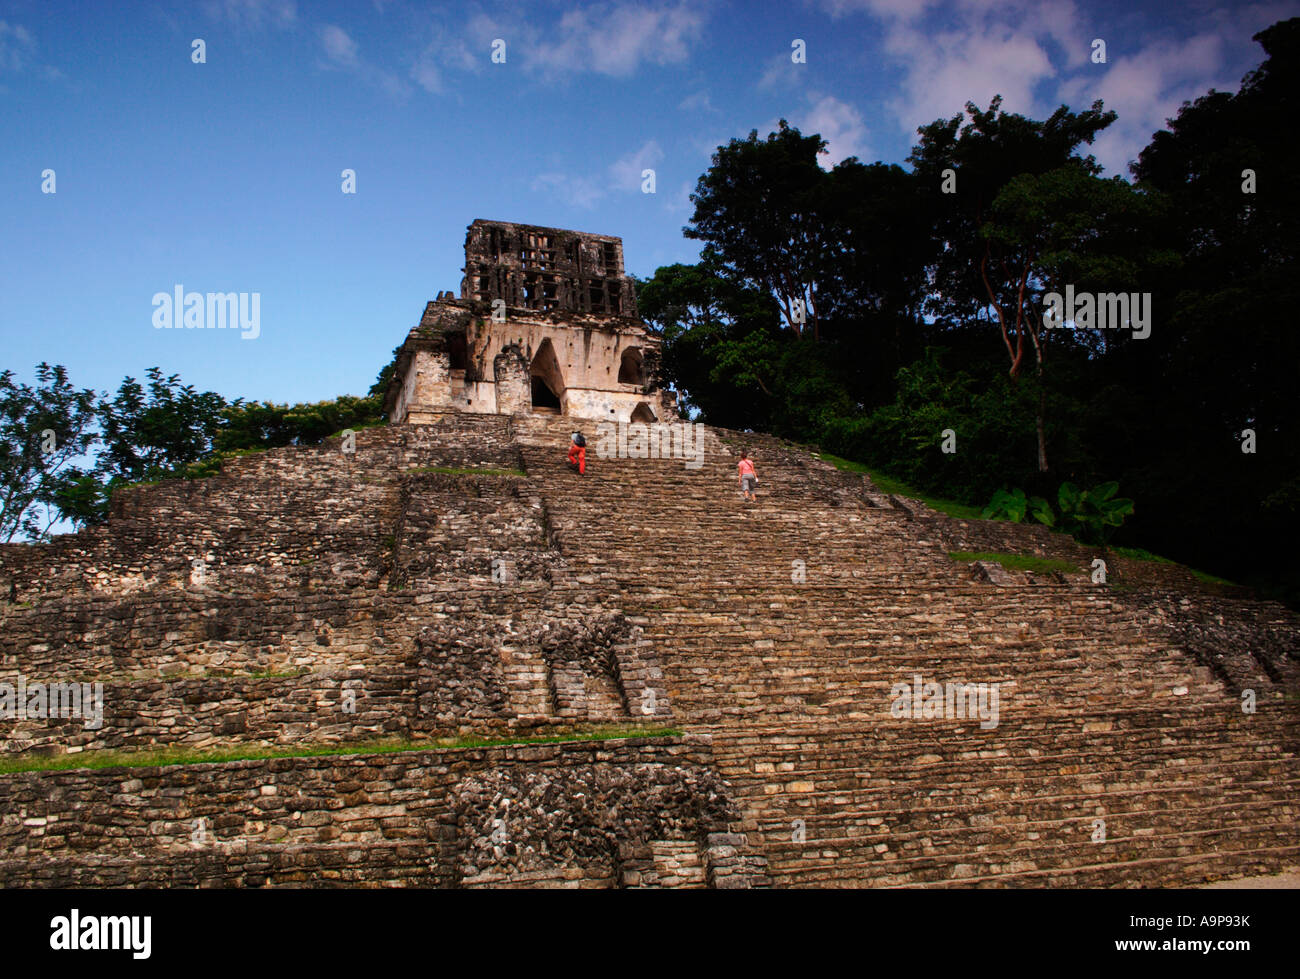 Tempel des Kreuzes in Palenque, die archäologische Maya-Ruine Standort in Chiapas, Mexiko Stockfoto